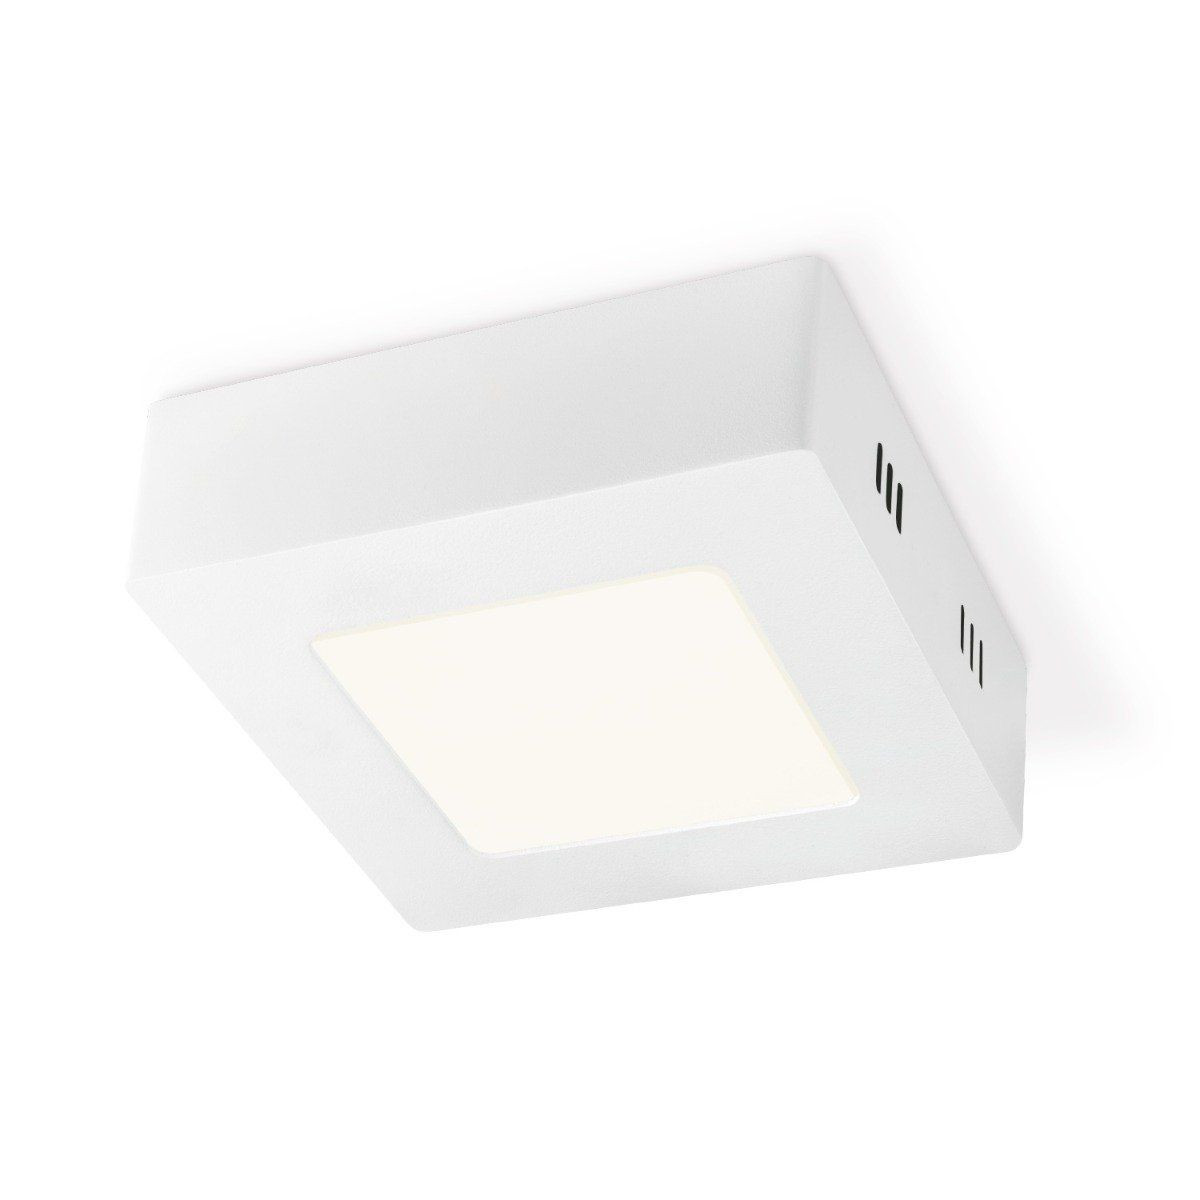 Light depot - LED plafondlamp Ska vierkant 12 - wit - Outlet